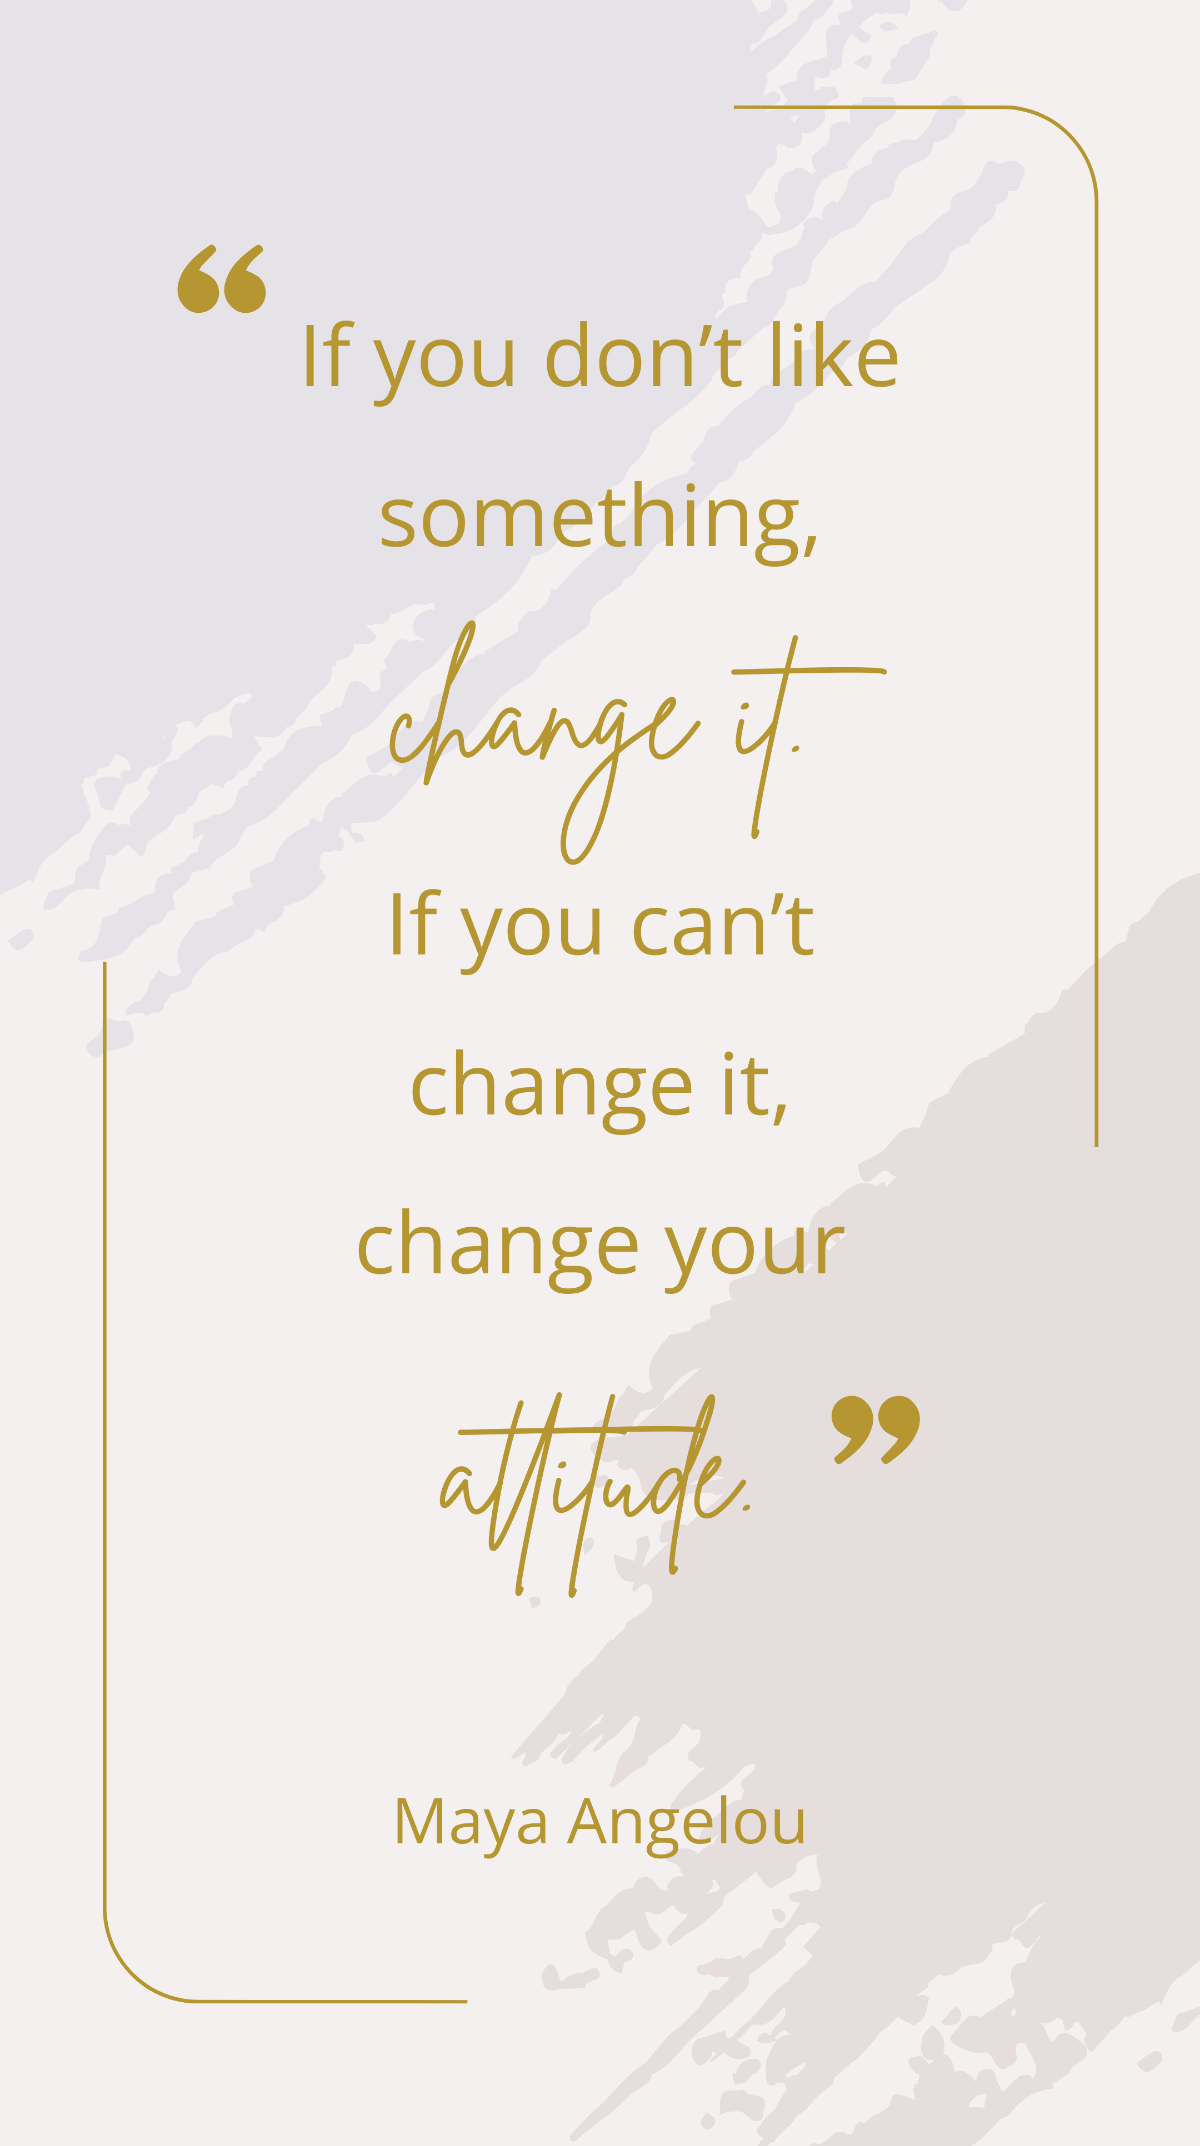 Maya Angelou - “If you don’t like something, change it. If you can’t change it, change your attitude.”